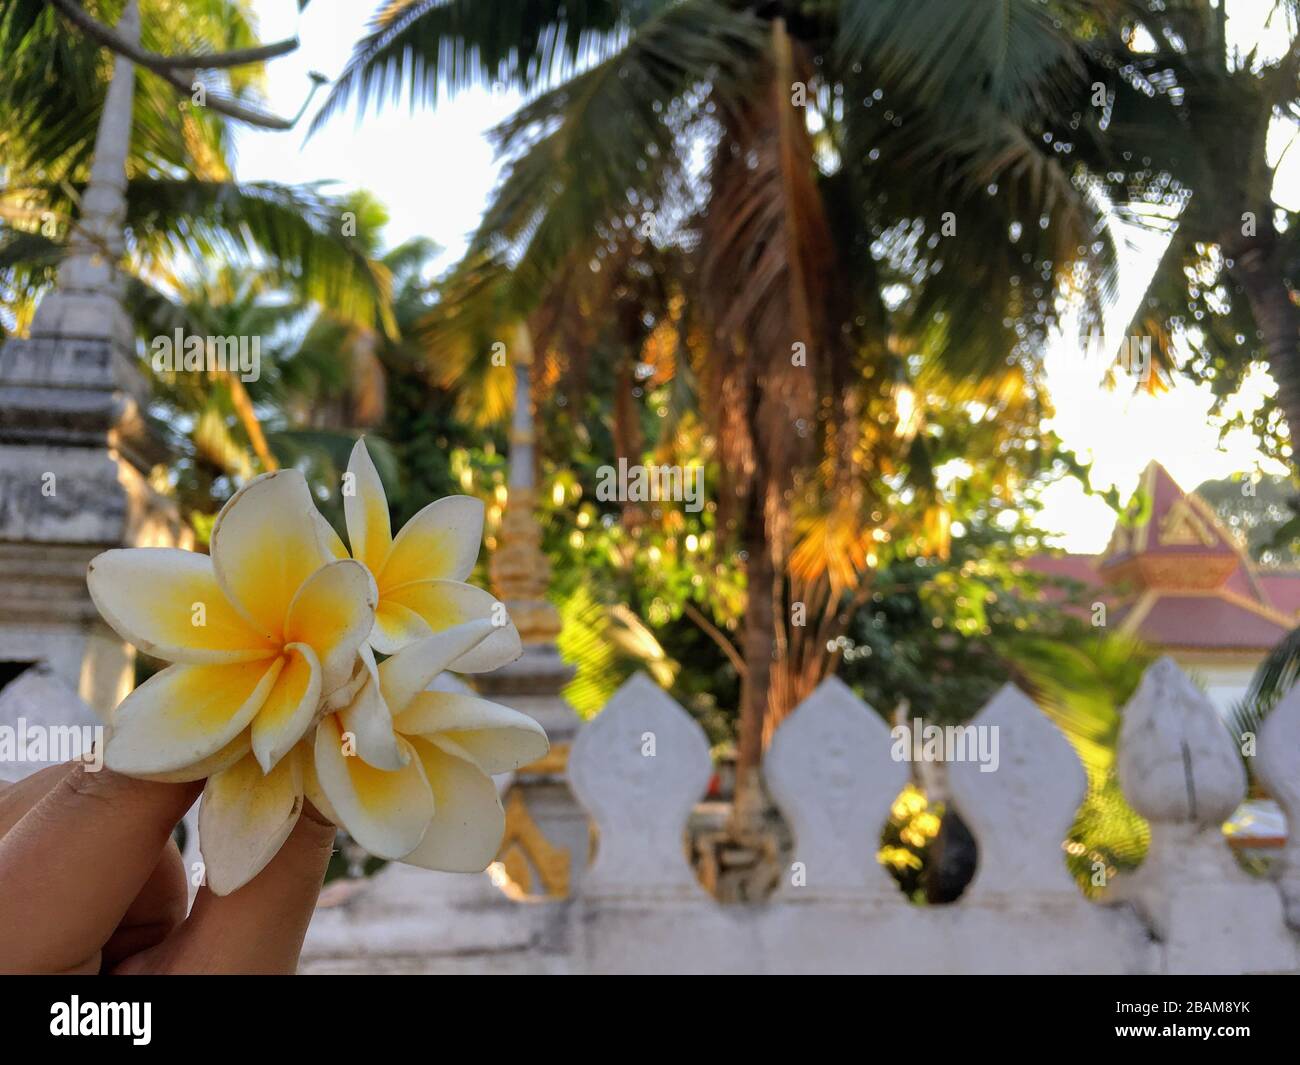 Frangipani, Plumeria, White Bright Yellow Flower in front of Buddhist Temple in Vientiane, Laos Republic Stock Photo